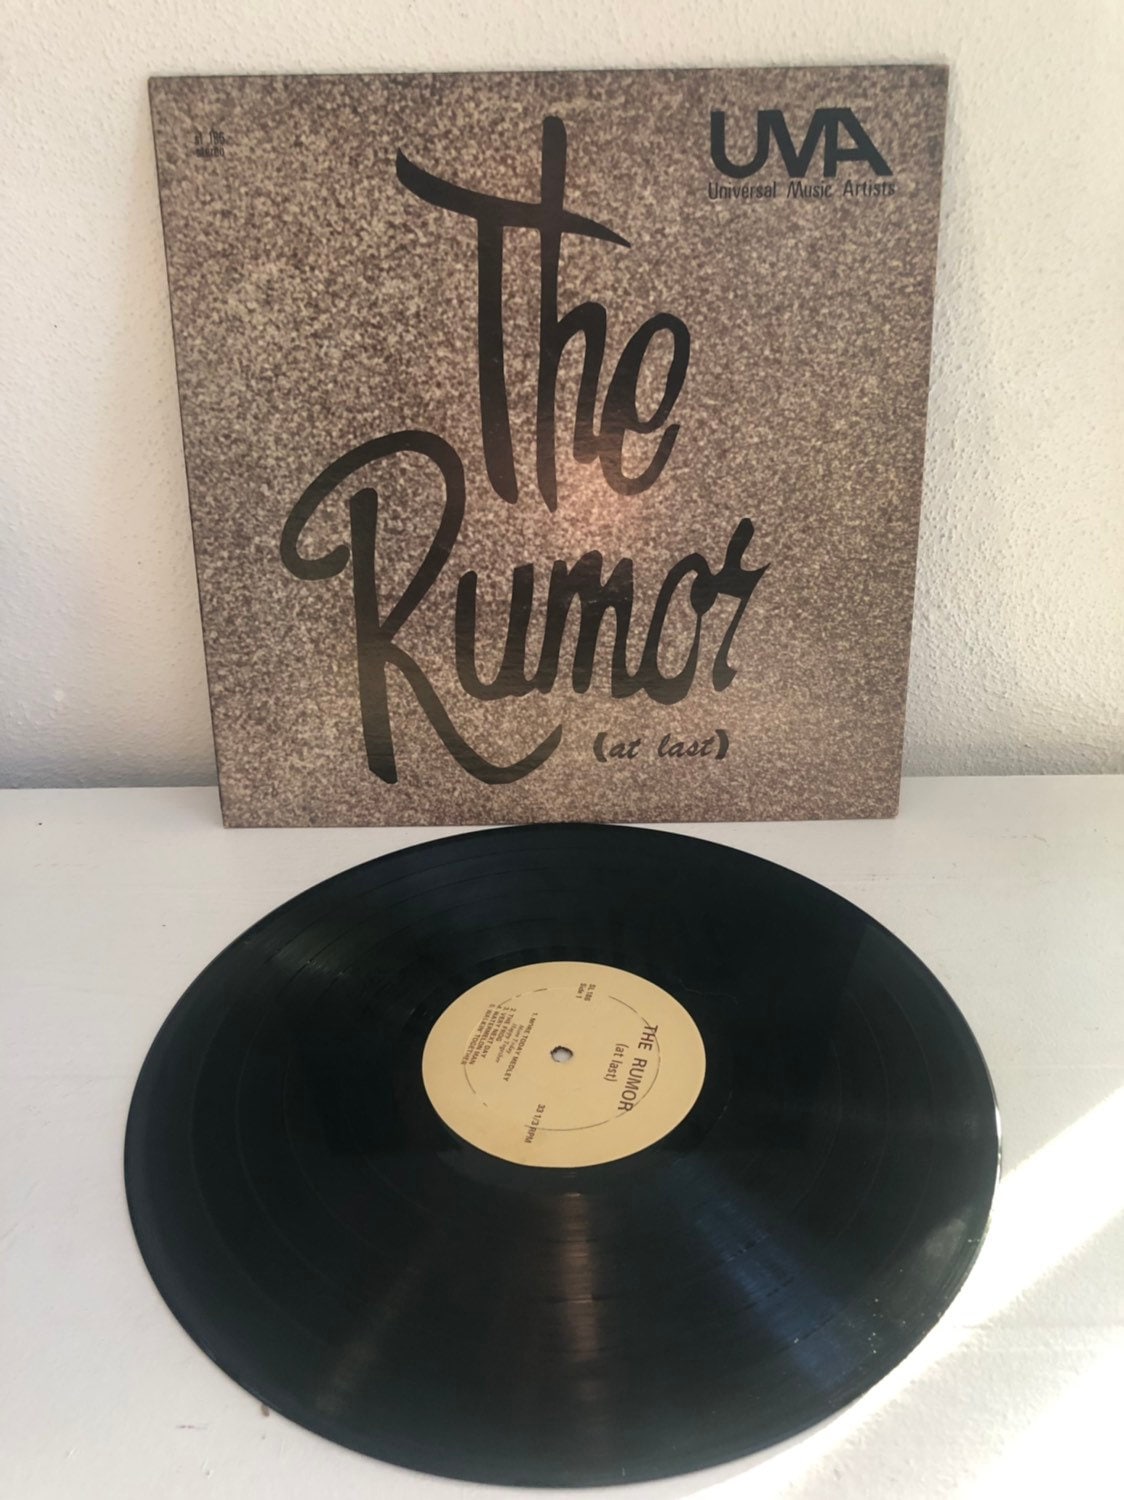 The Rumor (at last) SL186 Vintage Vinyl Record 1960's Jazz